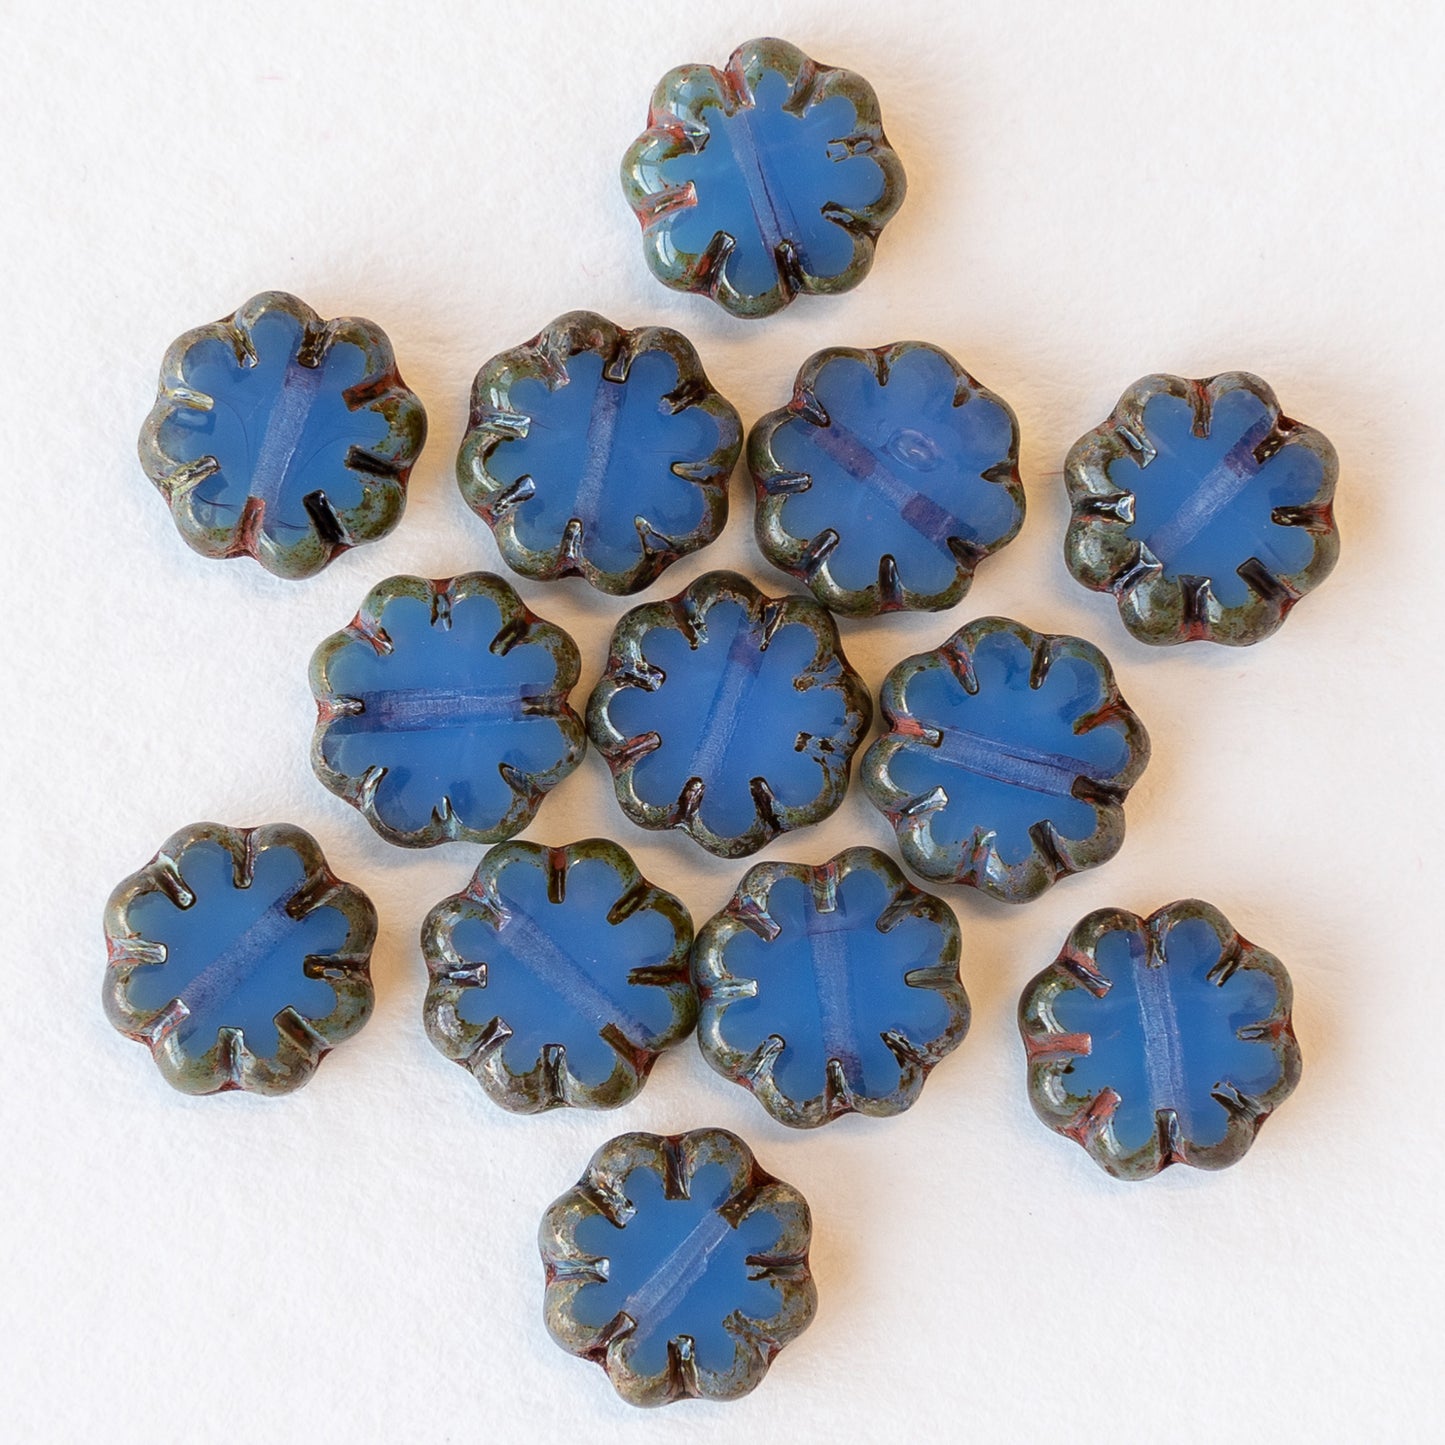 9mm Glass Flower Beads - Cornflower Blue Picasso Beads - 15 Beads